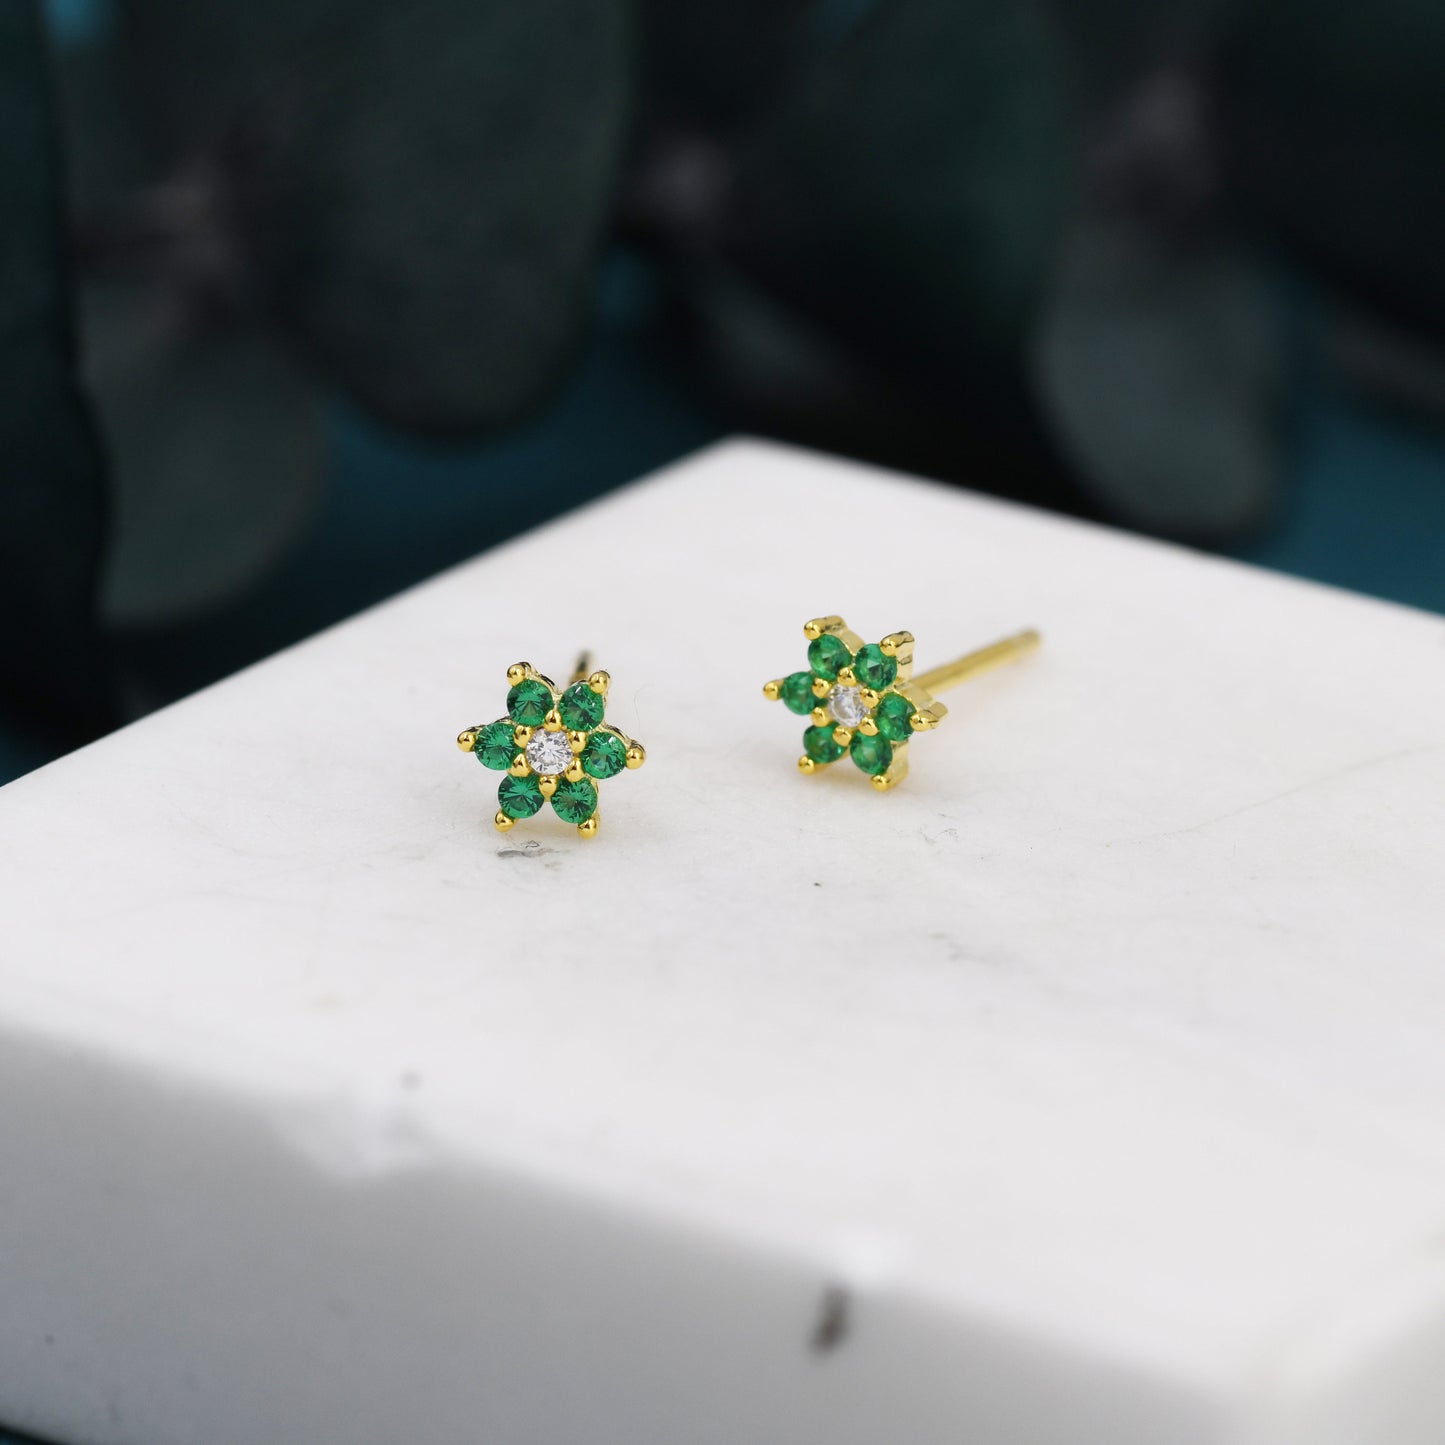 Very Tiny Emerald Green CZ Flower Stud Earrings in Sterling Silver, Silver or Gold, Crystal Flower Earrings, Stacking Earrings